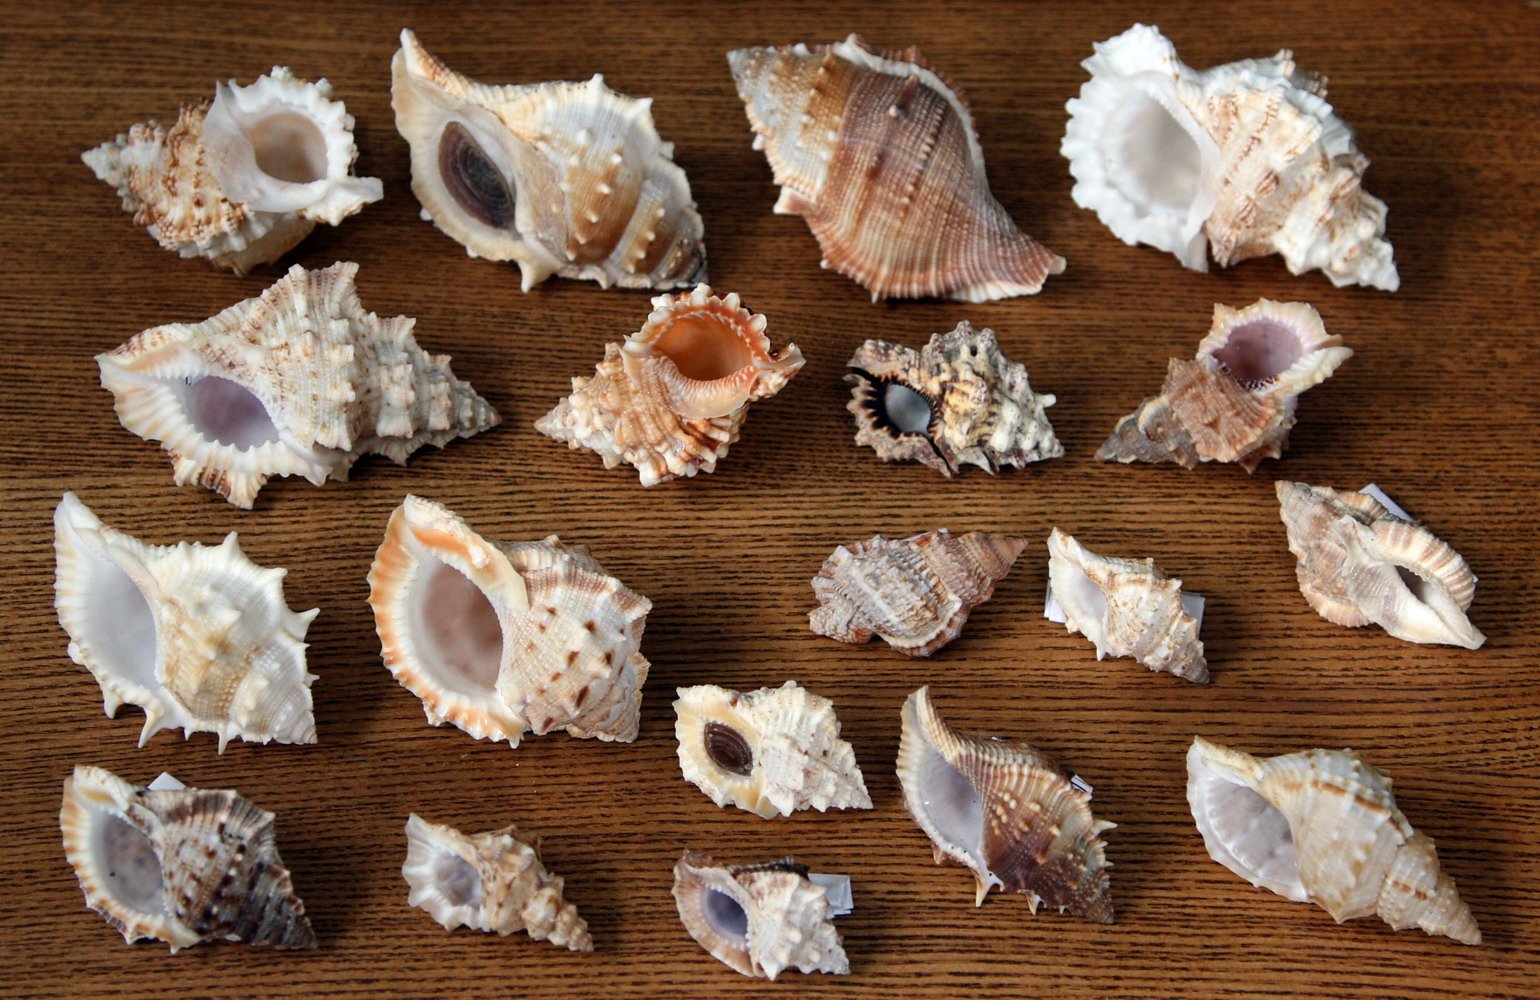 Моллюски форма раковины. Турителла теребра. Раковины моллюсков черного моря. Морская раковина. Ракушки морские.